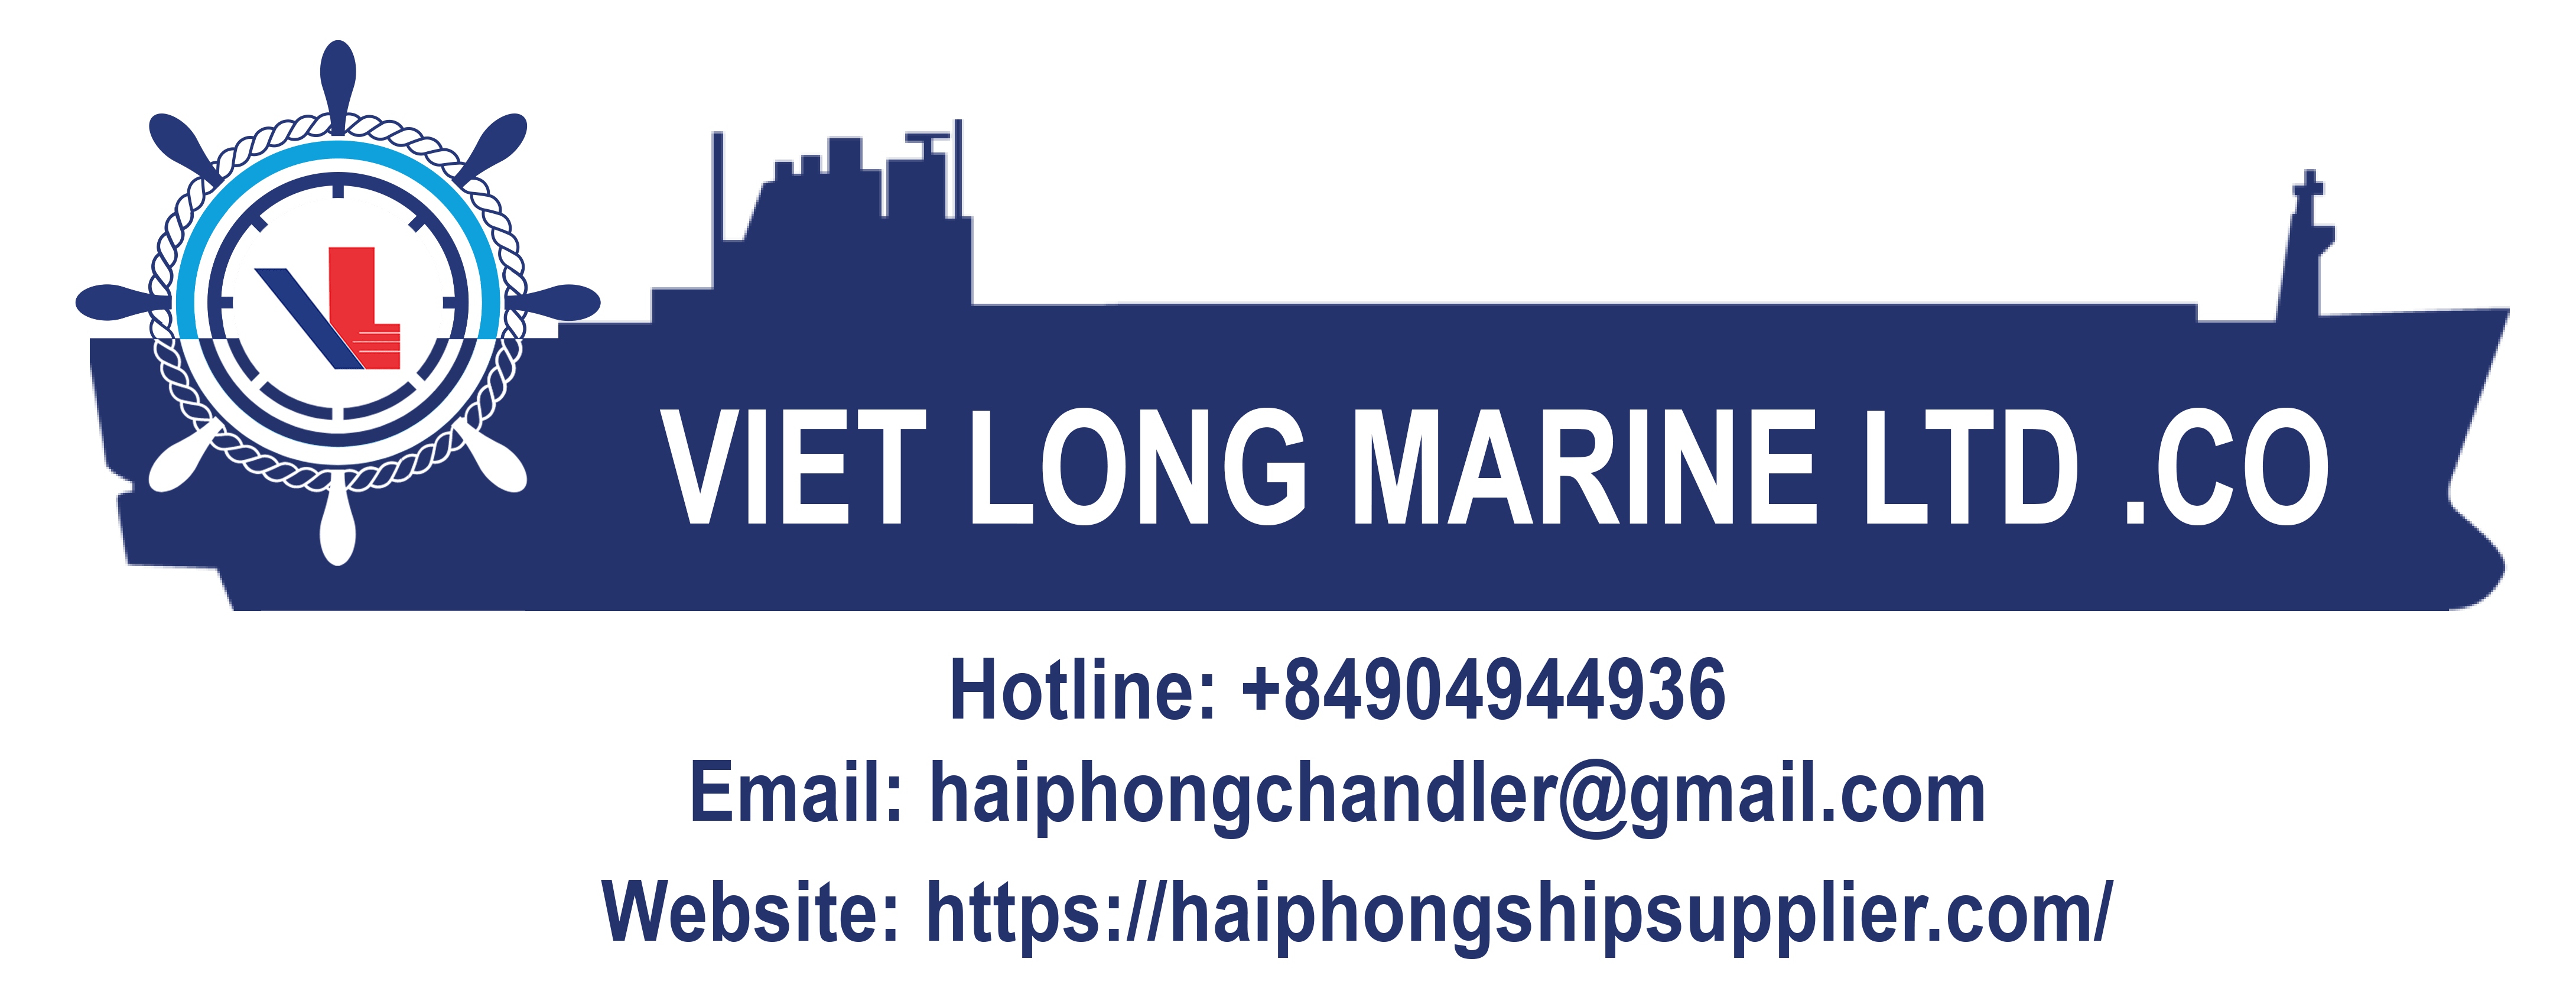 Vietnam Ship Supply, Vietnam Shipchandler